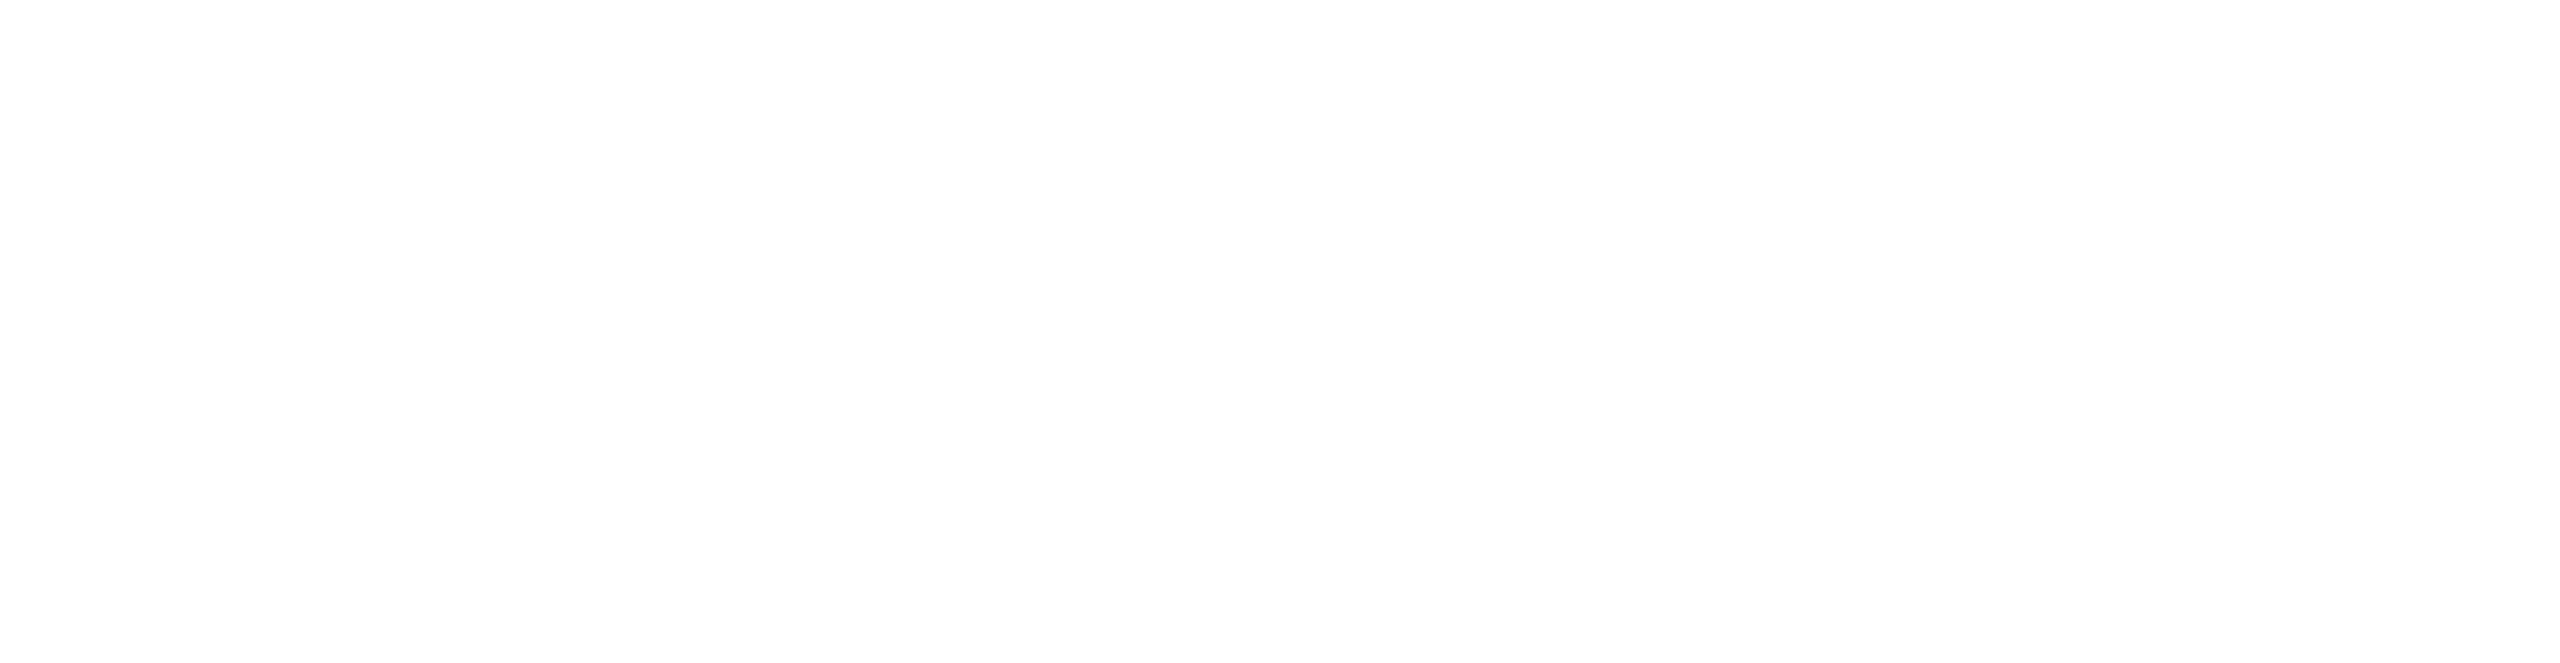 Five Guys logo